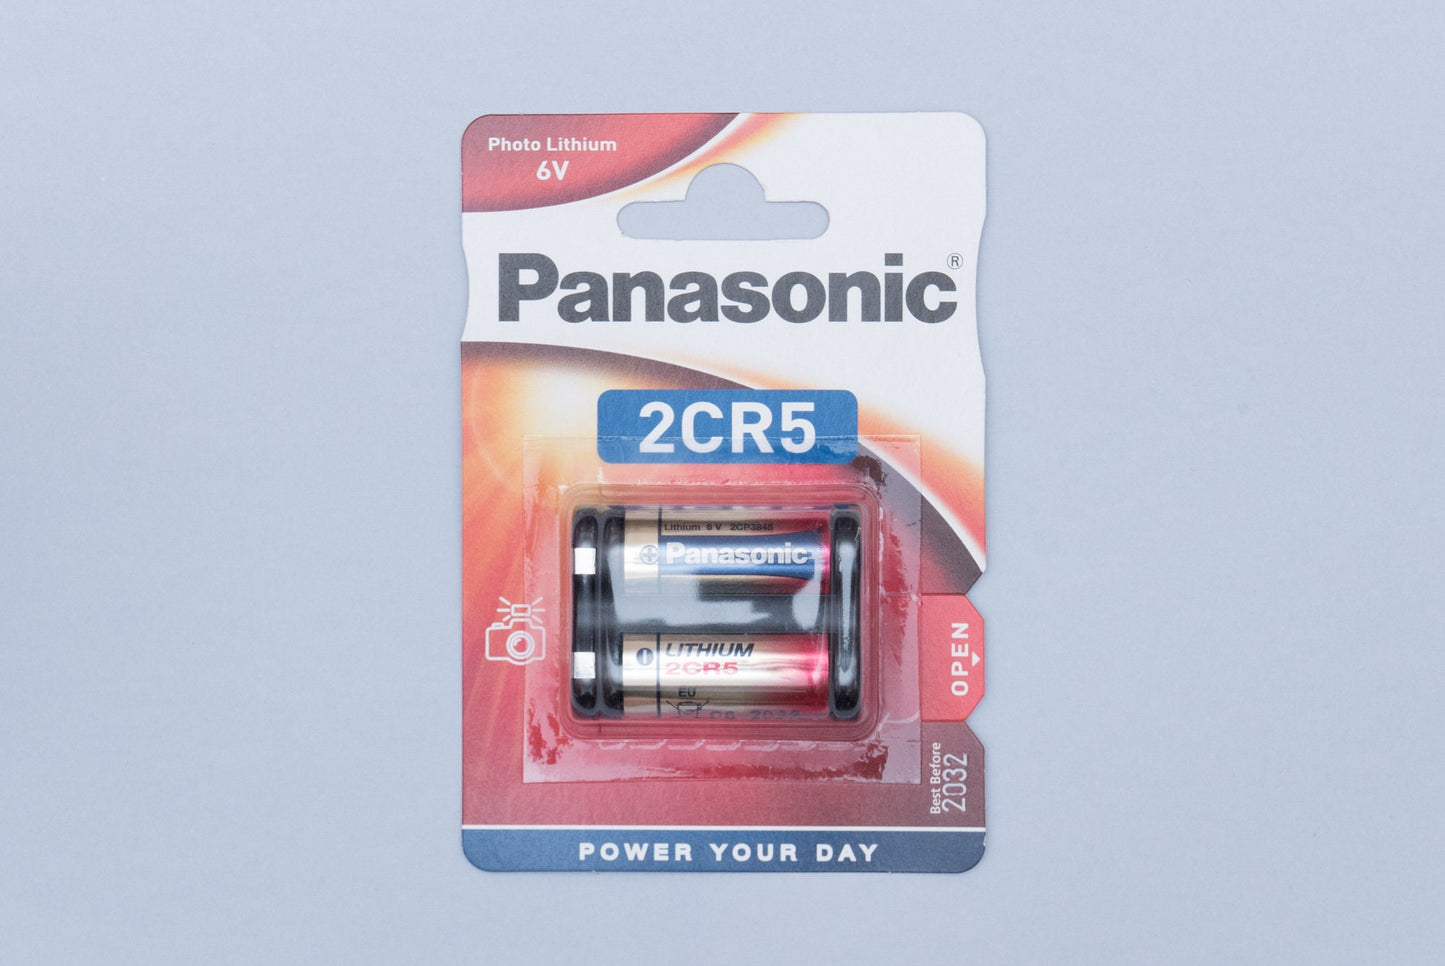 Panasonic 2CR5 Lithium Battery for Film Cameras